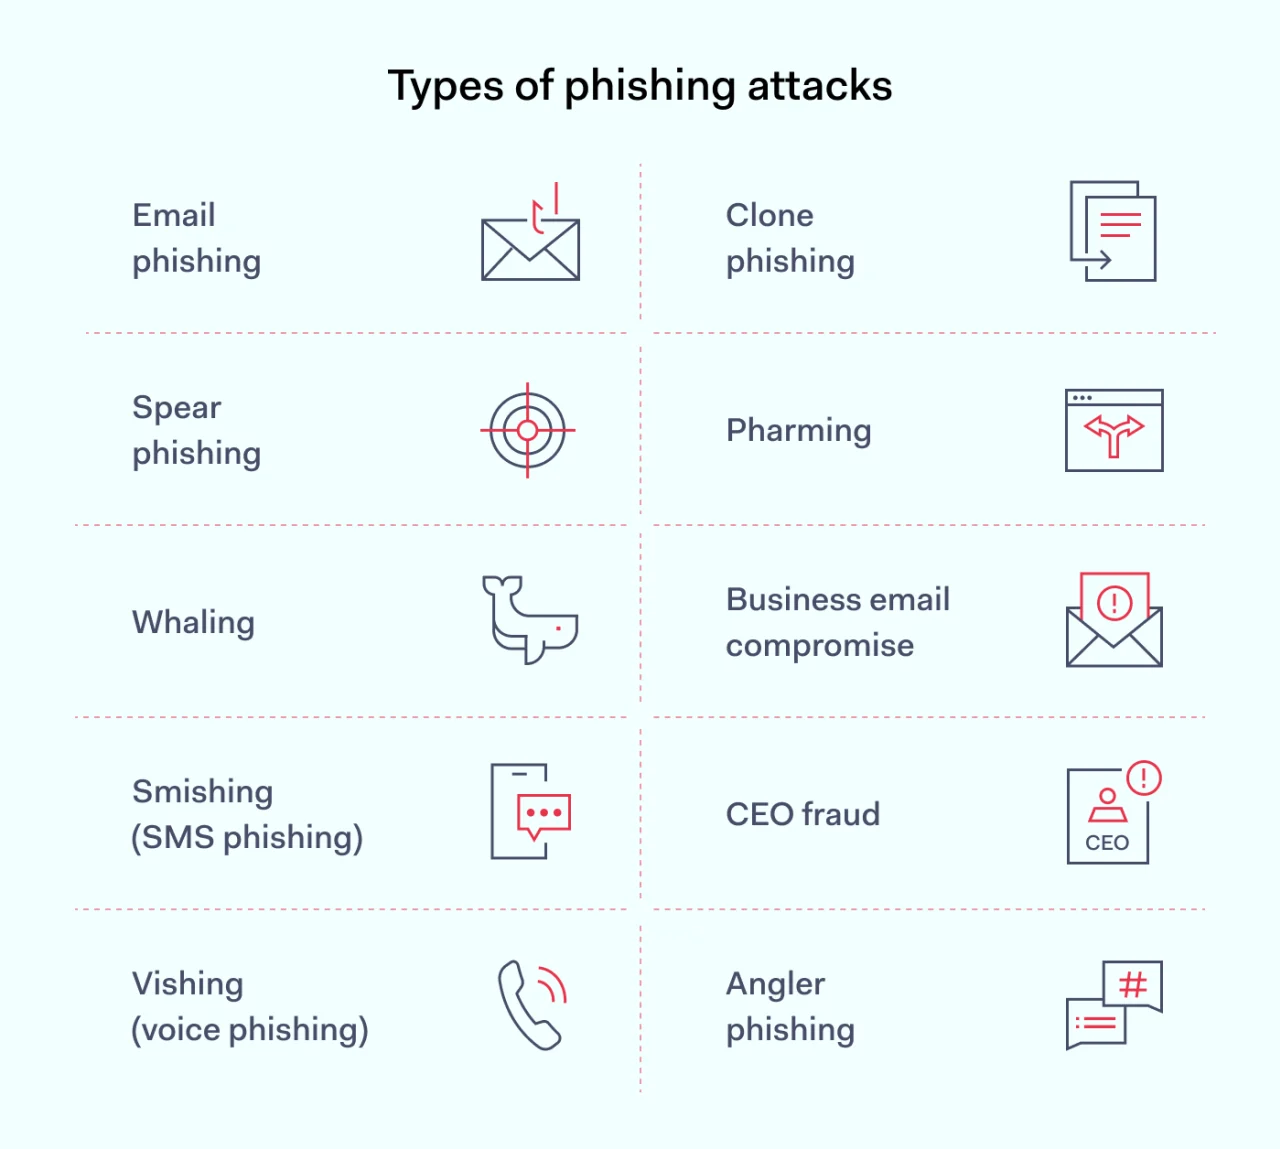 Common types of phishing attacks